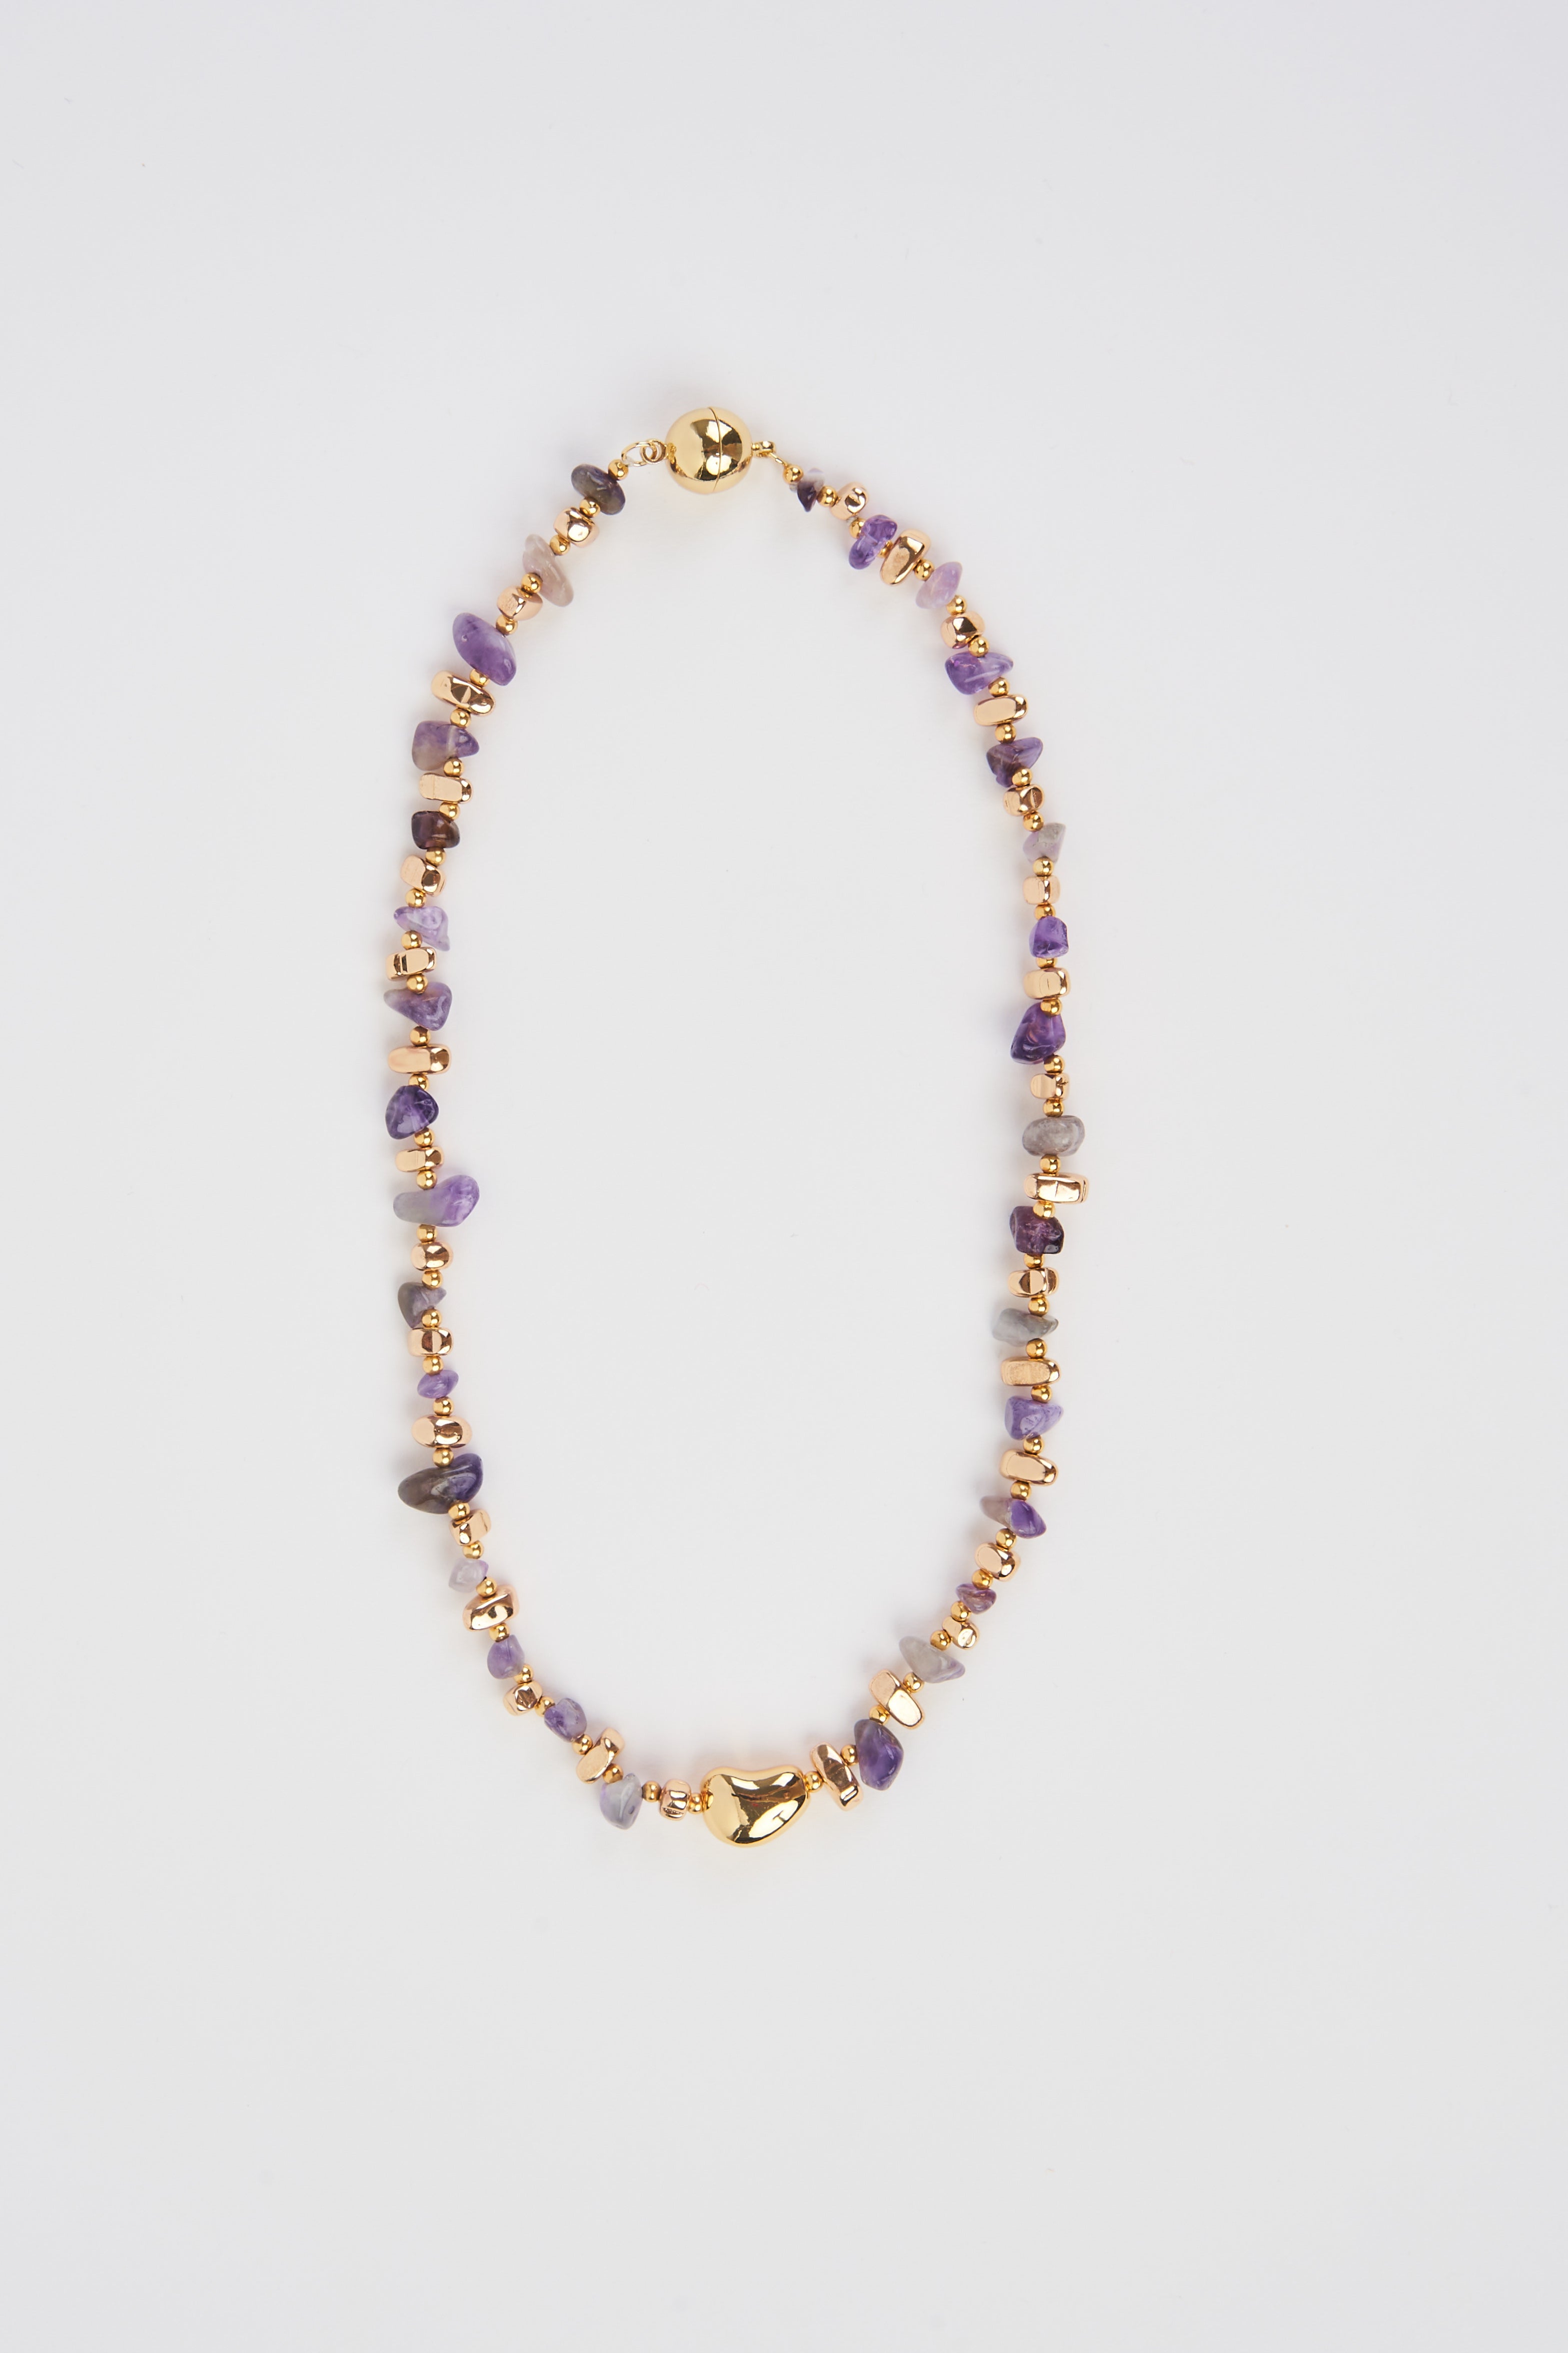 Amethyst Gemstone Teardrop Shaped Faceted Bead Necklace NS-1189 – Online  Gemstone & Jewelry Store By Gehna Jaipur